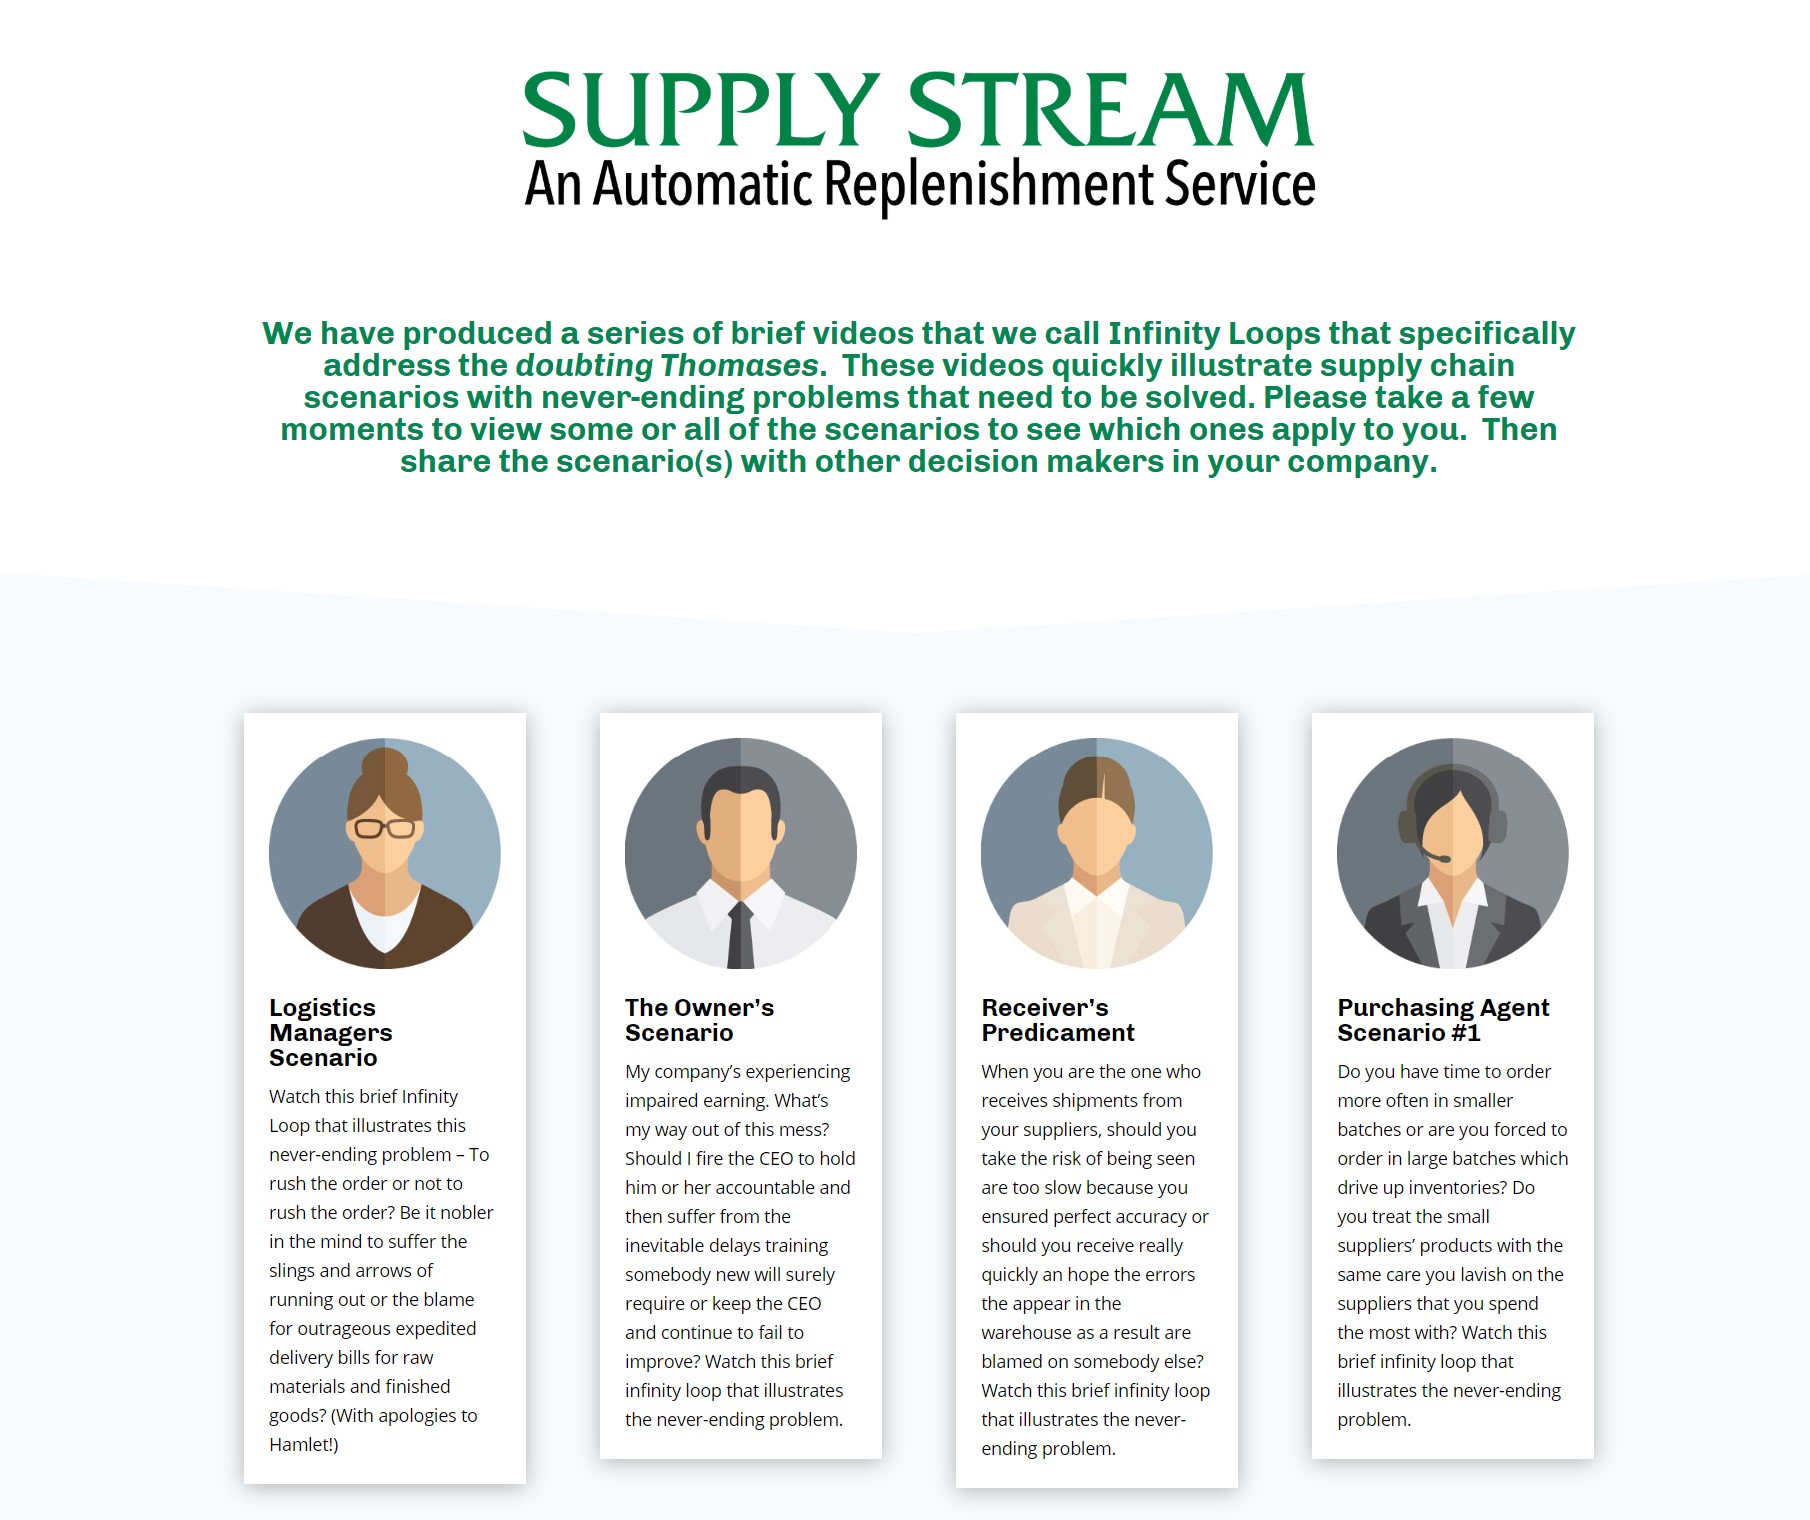 Supply Stream Videos